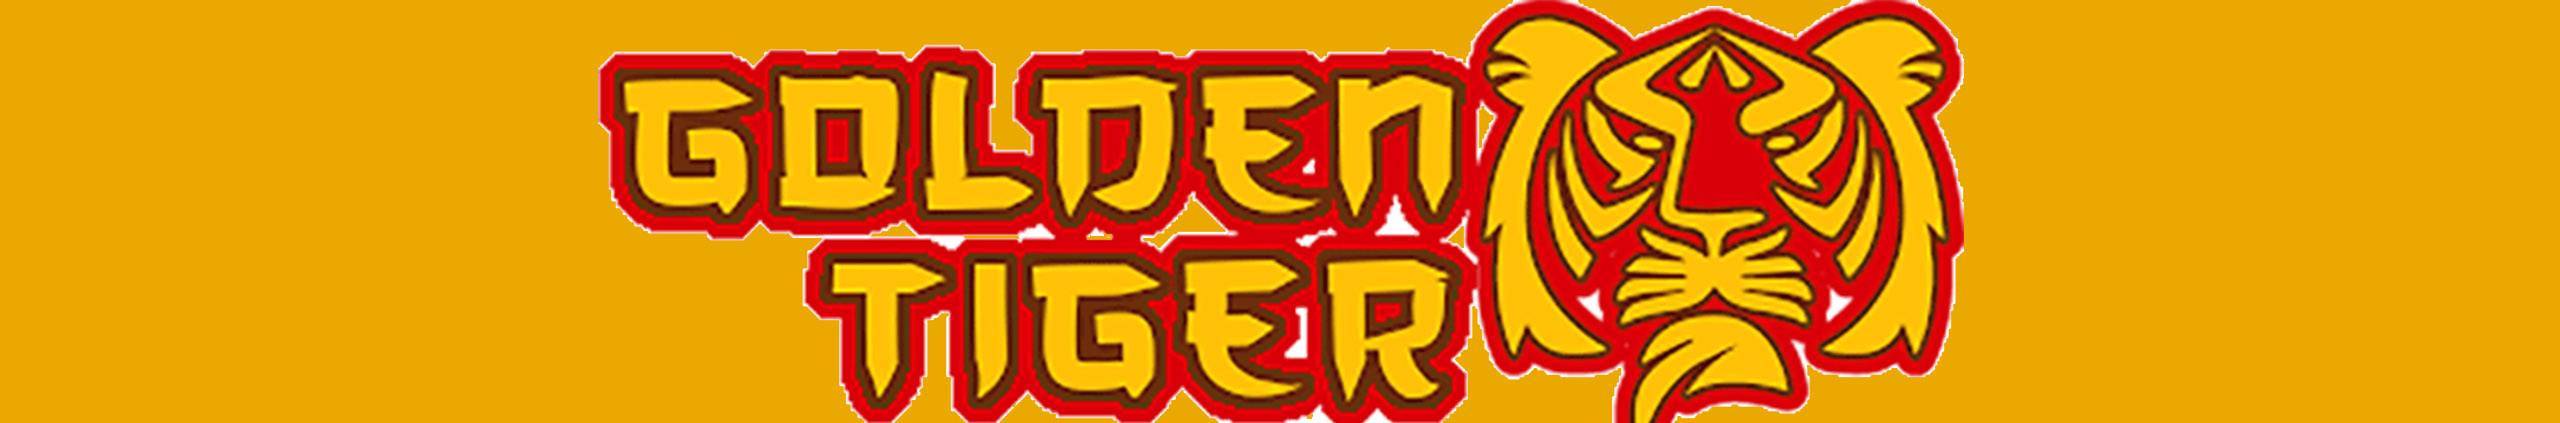 Casino Review Golden Tiger Casino Review